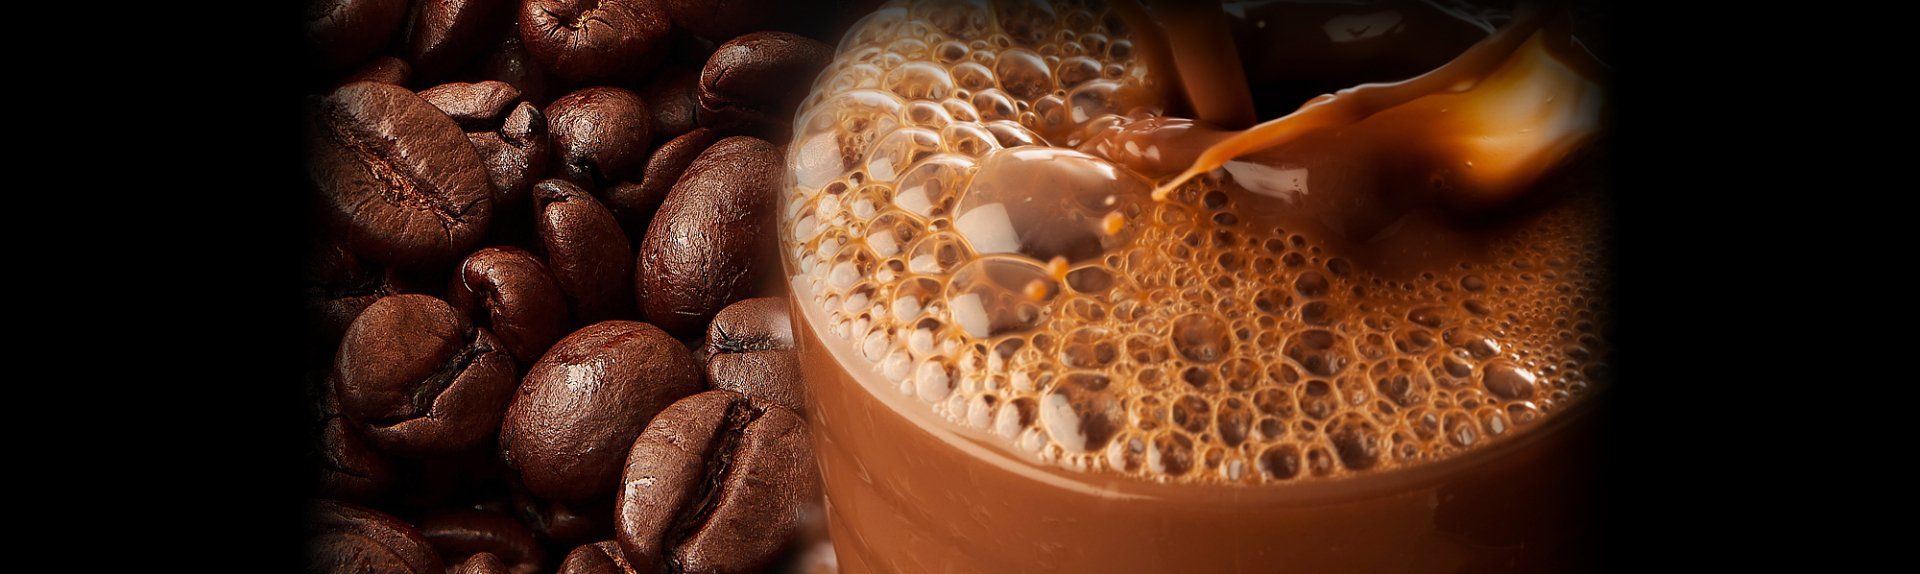 Hot Chocolate | Murray, UT | Serv-A-Cup Office Coffee